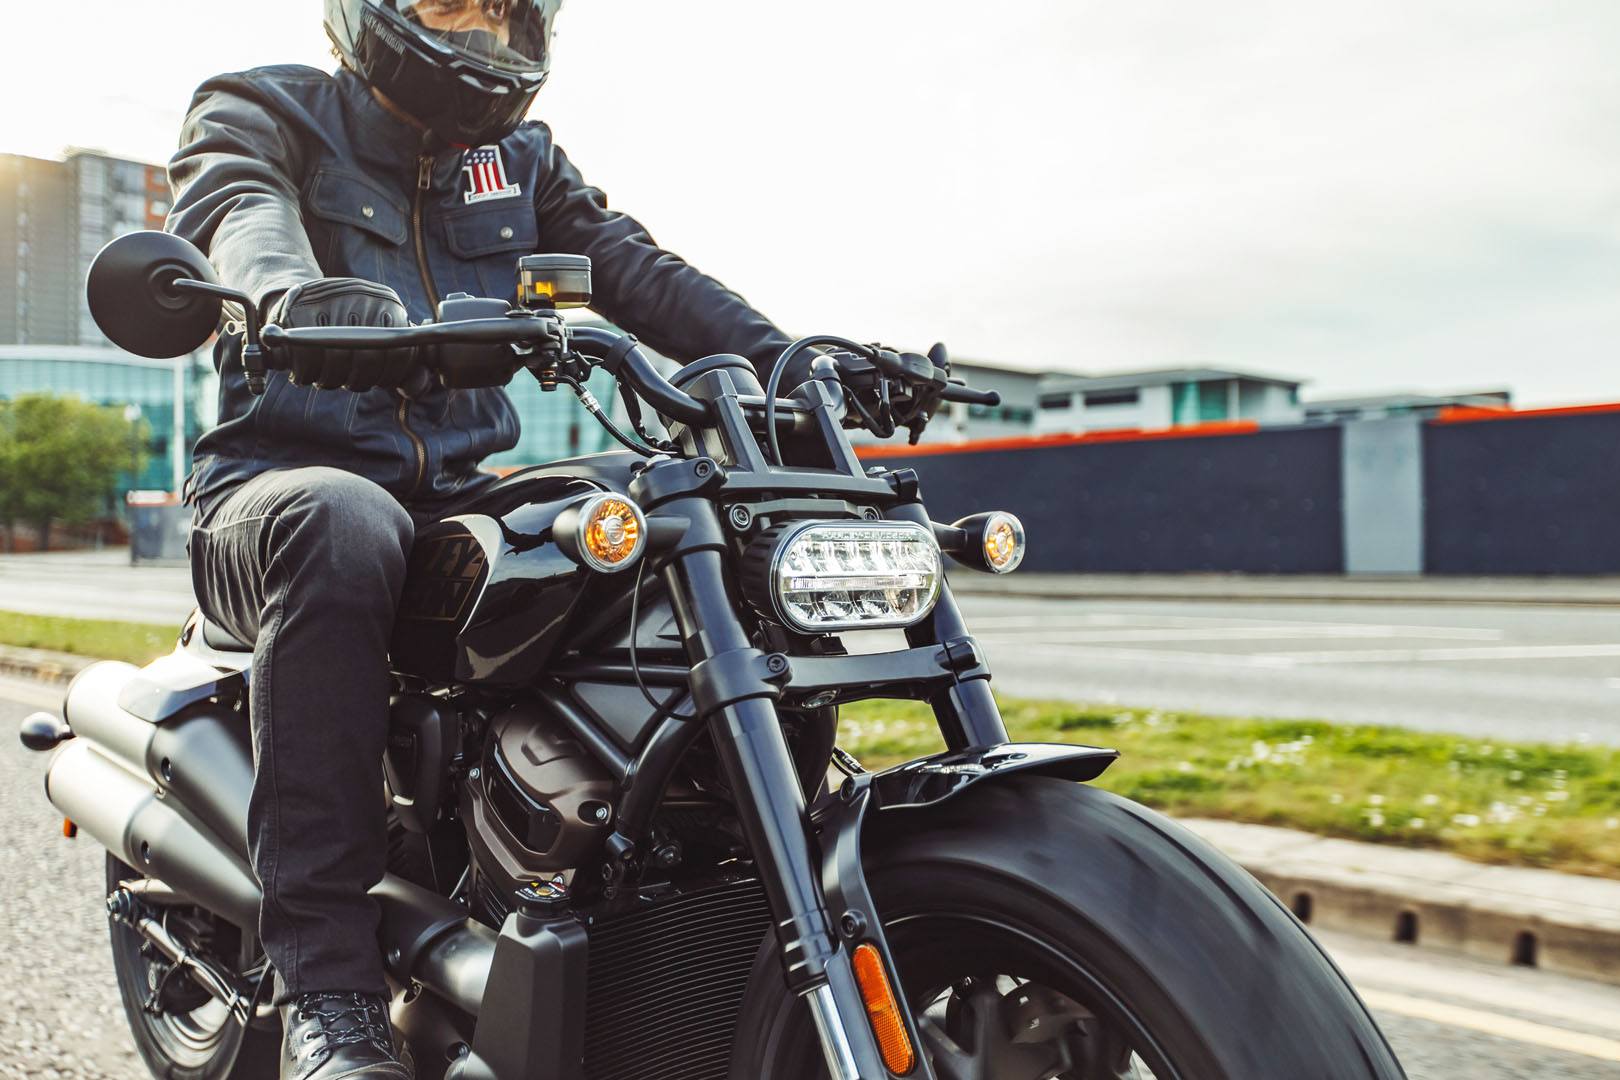 2021 Harley-Davidson Sportster® S in Flint, Michigan - Photo 15